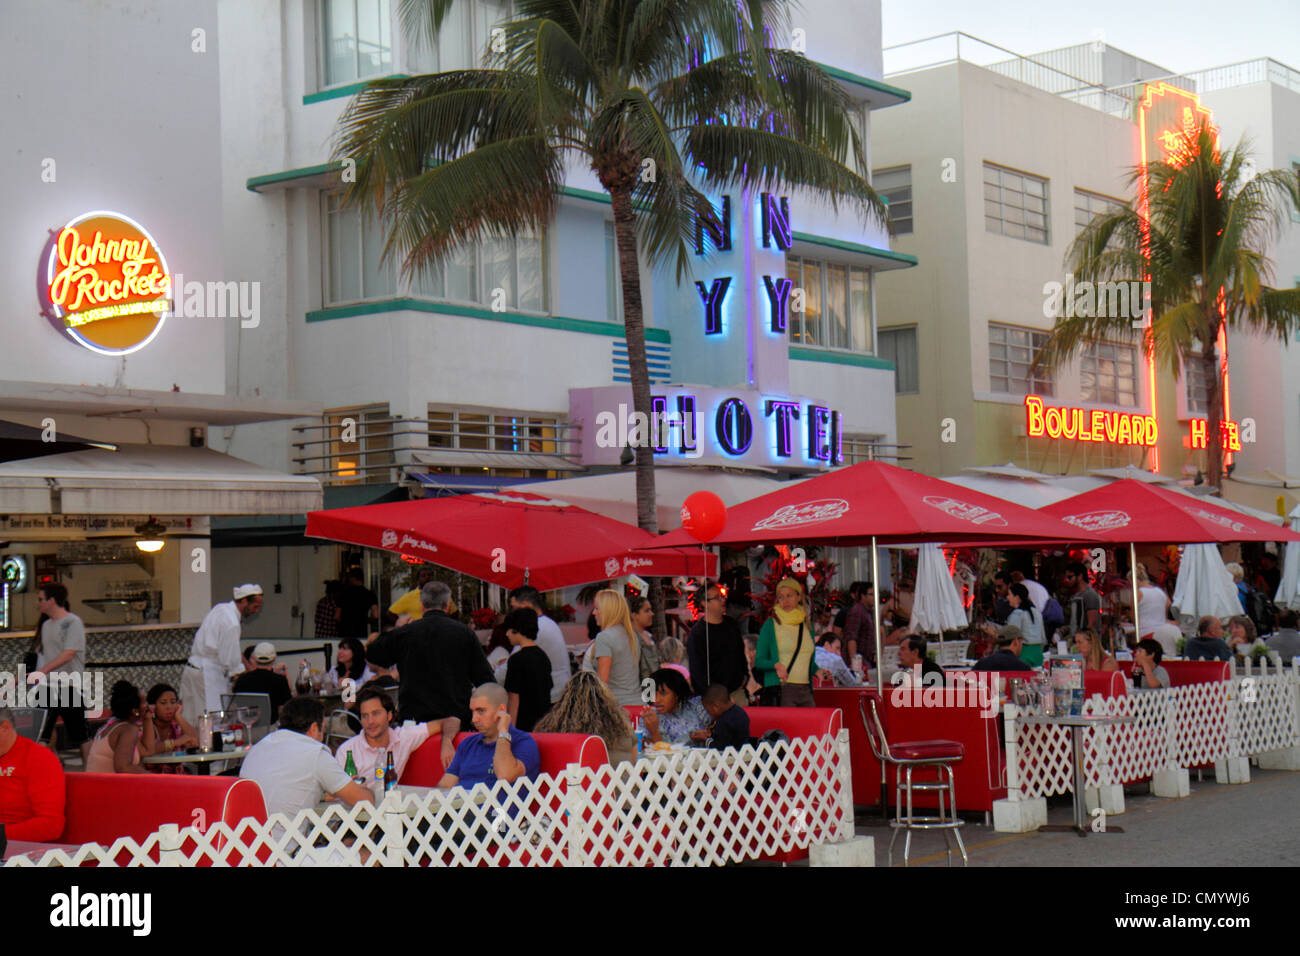 Miami Beach Florida,Ocean Drive,Art Deco Historic District,hotels,restaurant restaurants food dining cafe cafes,al fresco sidewalk outside tables,umbr Stock Photo